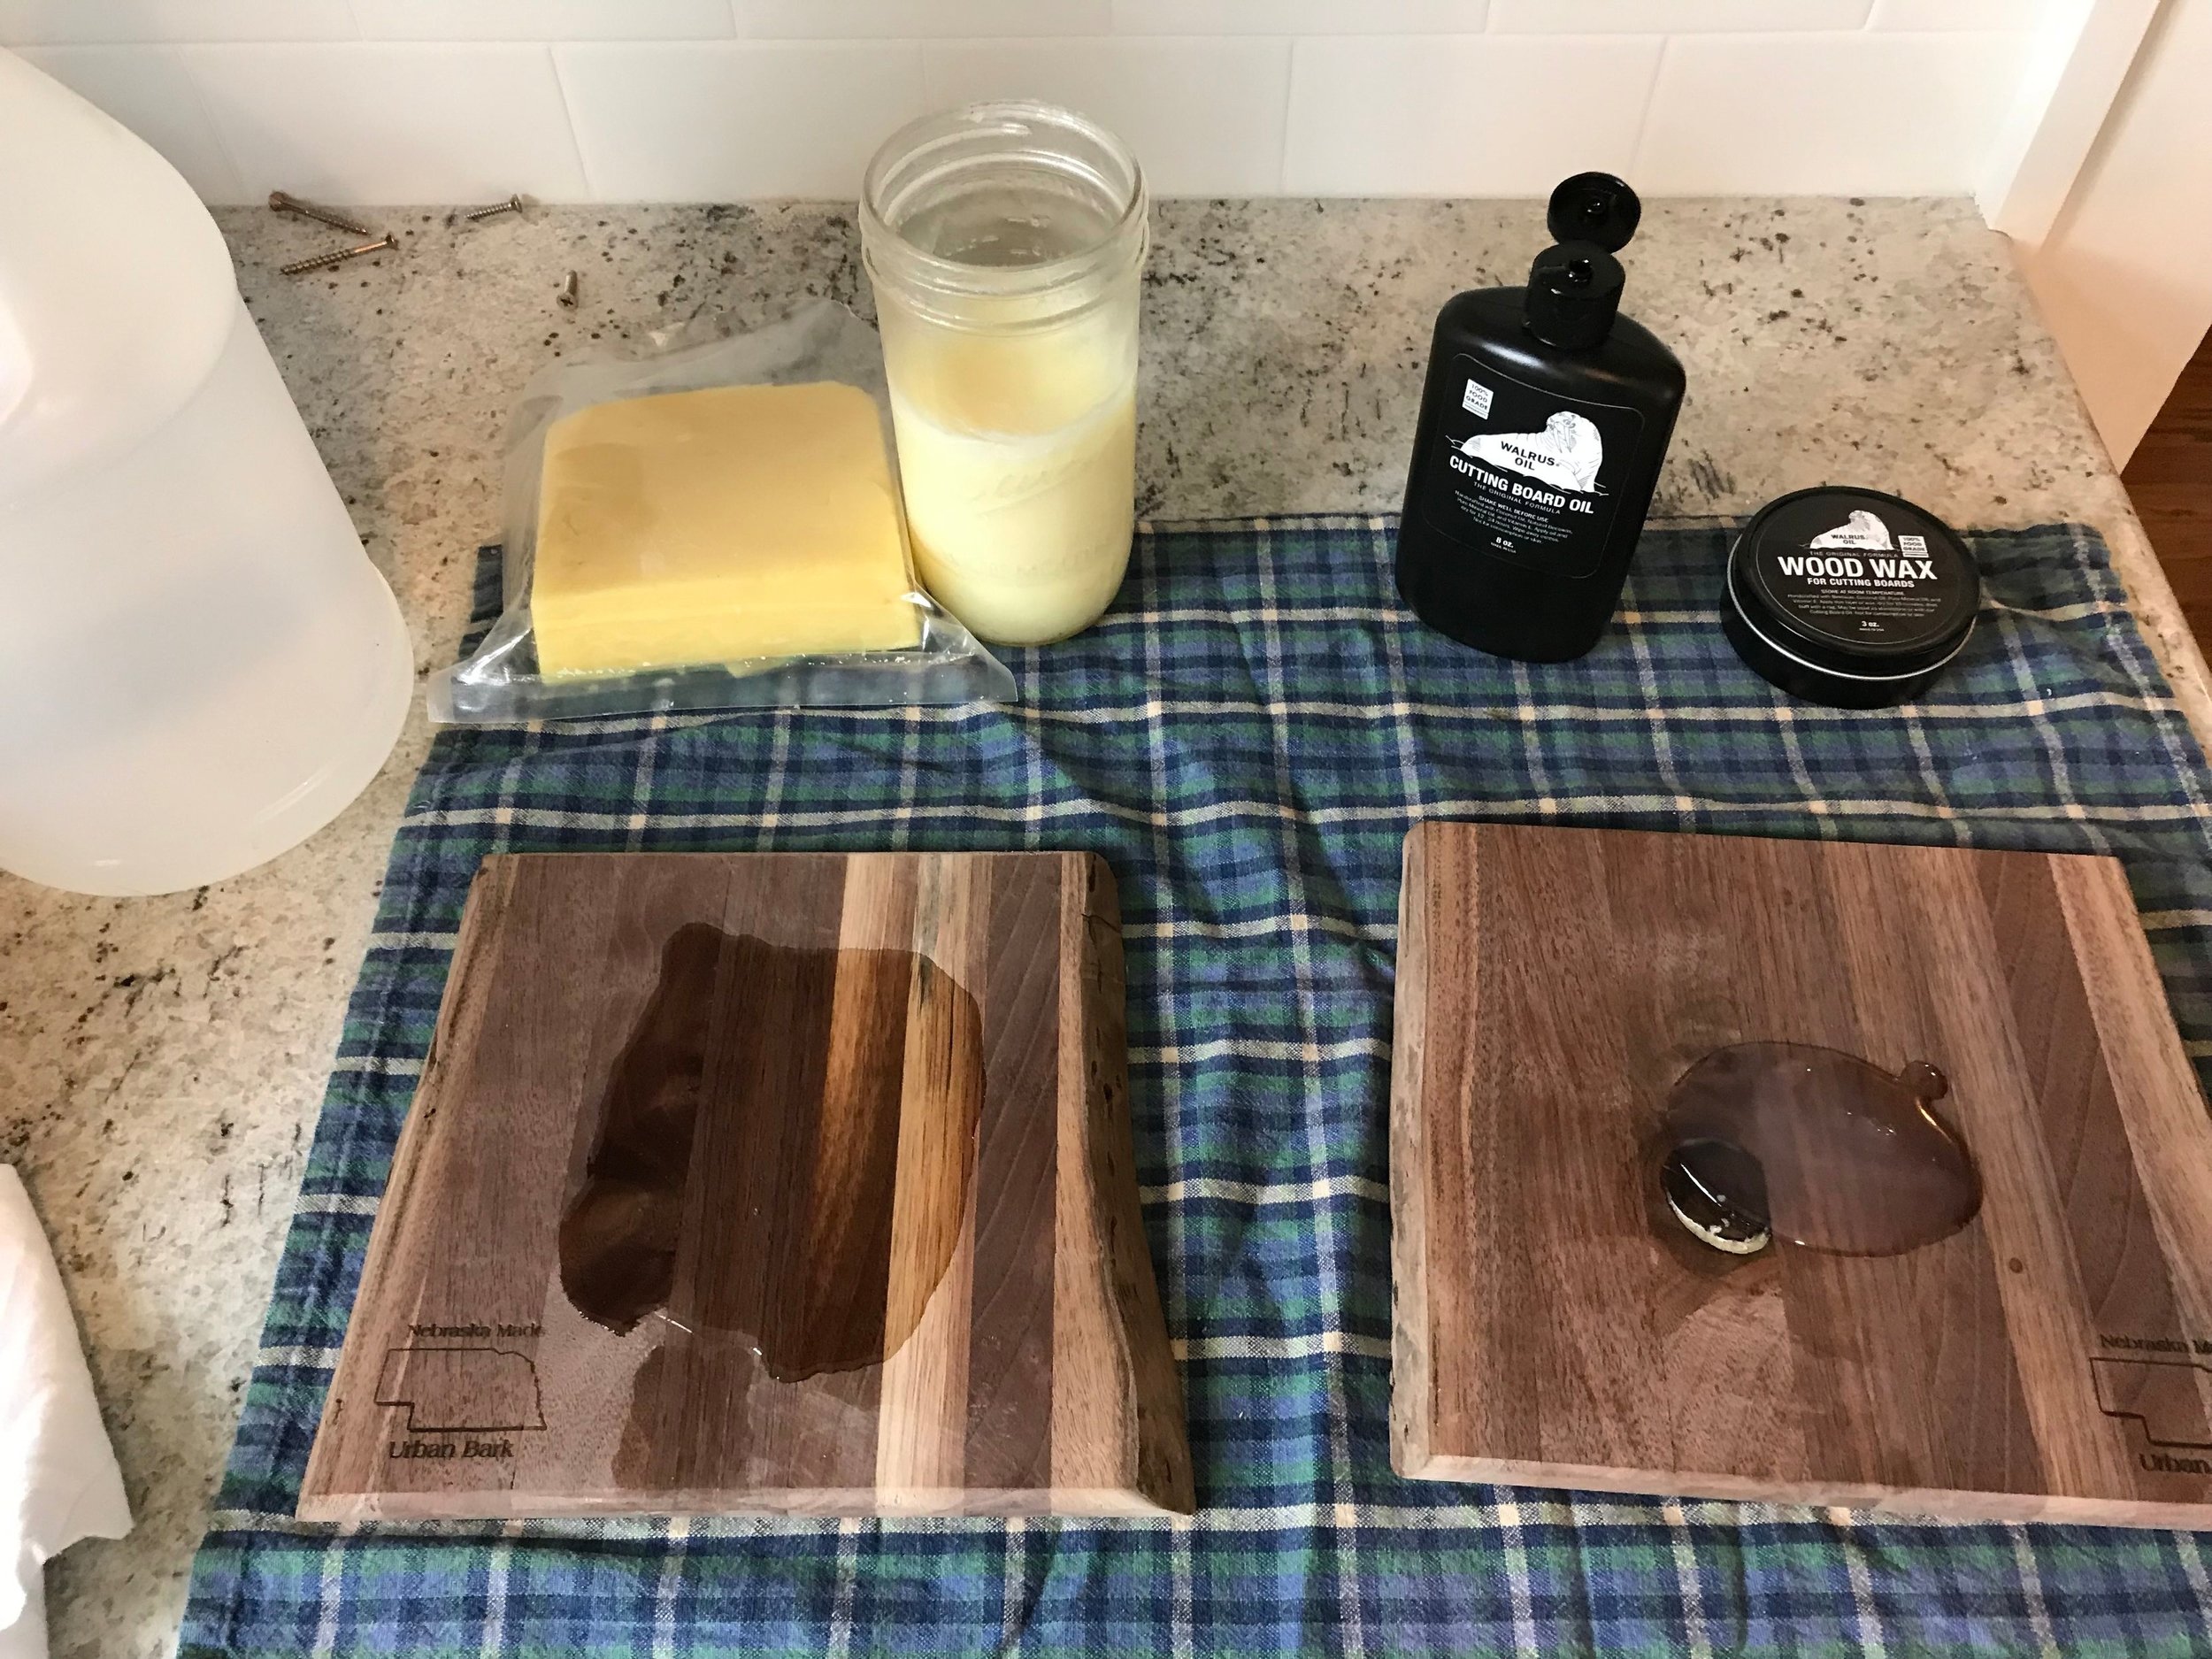 Walrus Oil Wood Wax for Cutting Boards